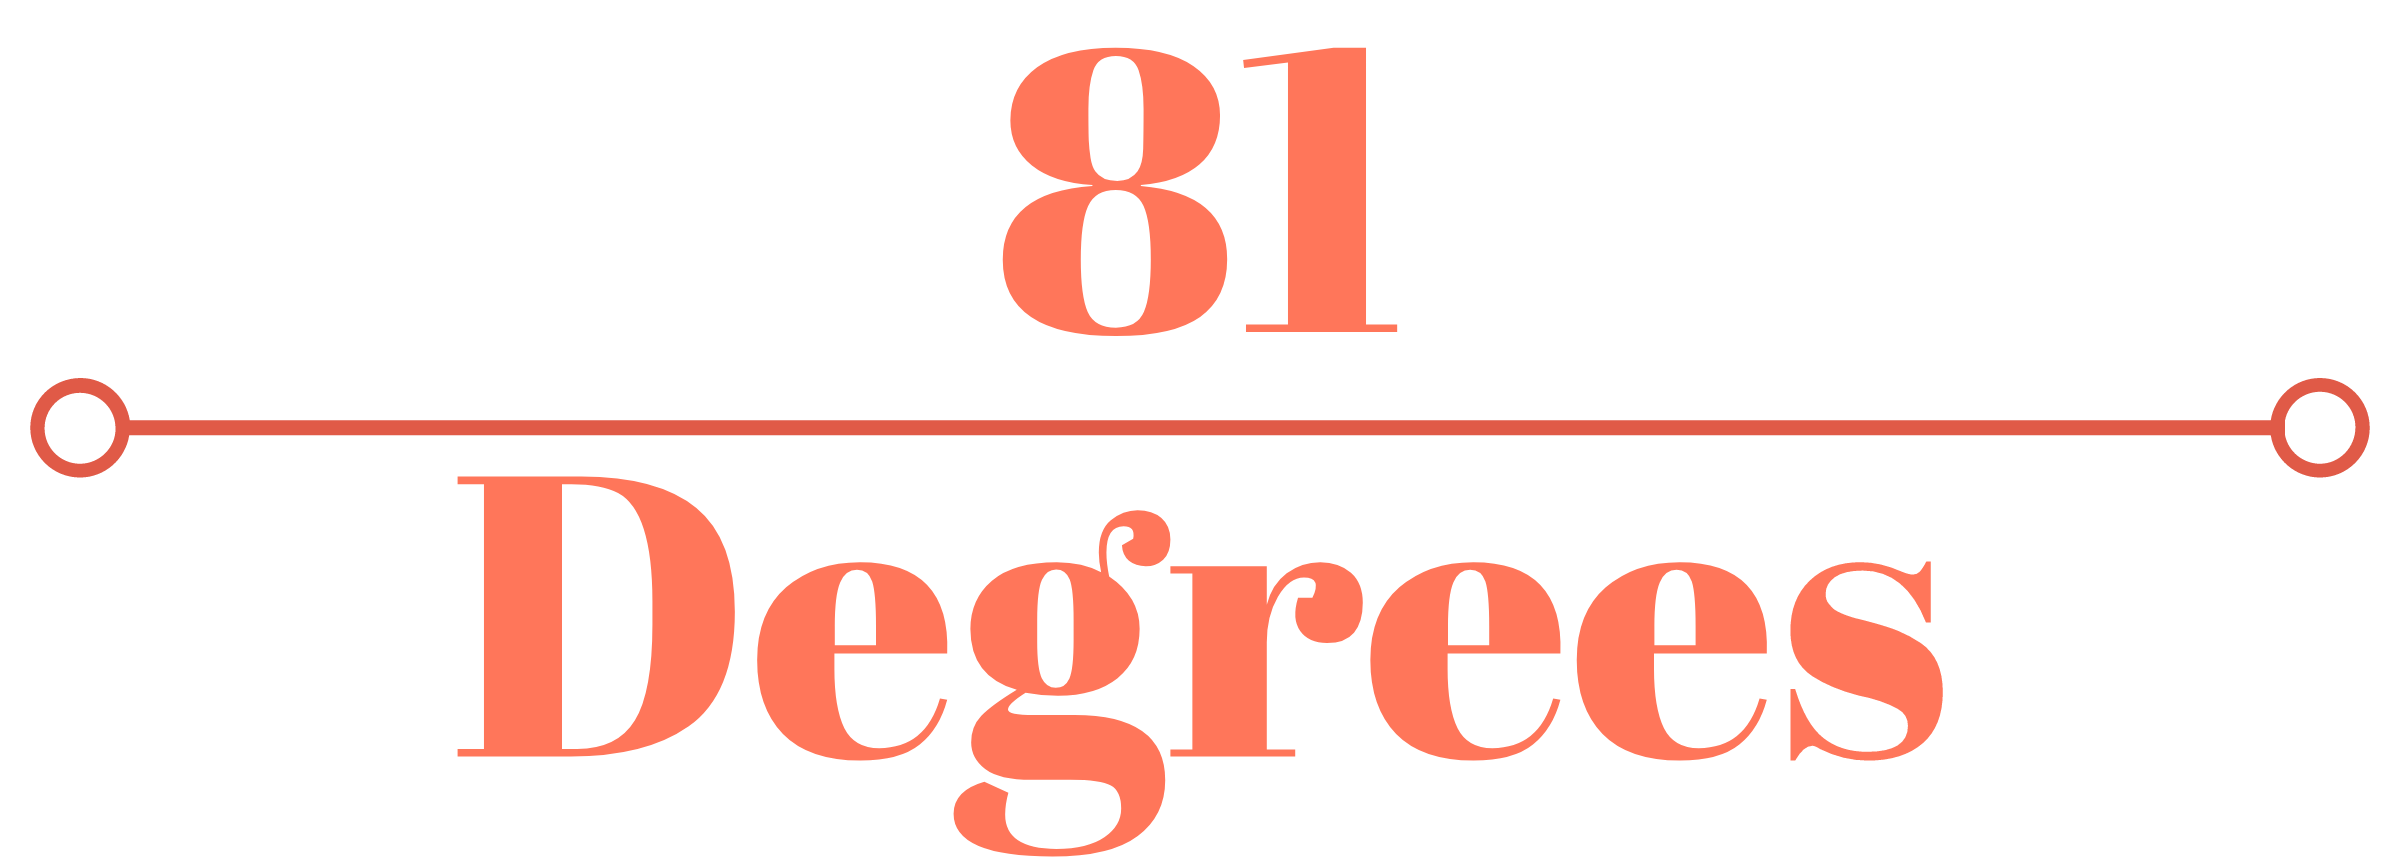 81 Degrees, LLC